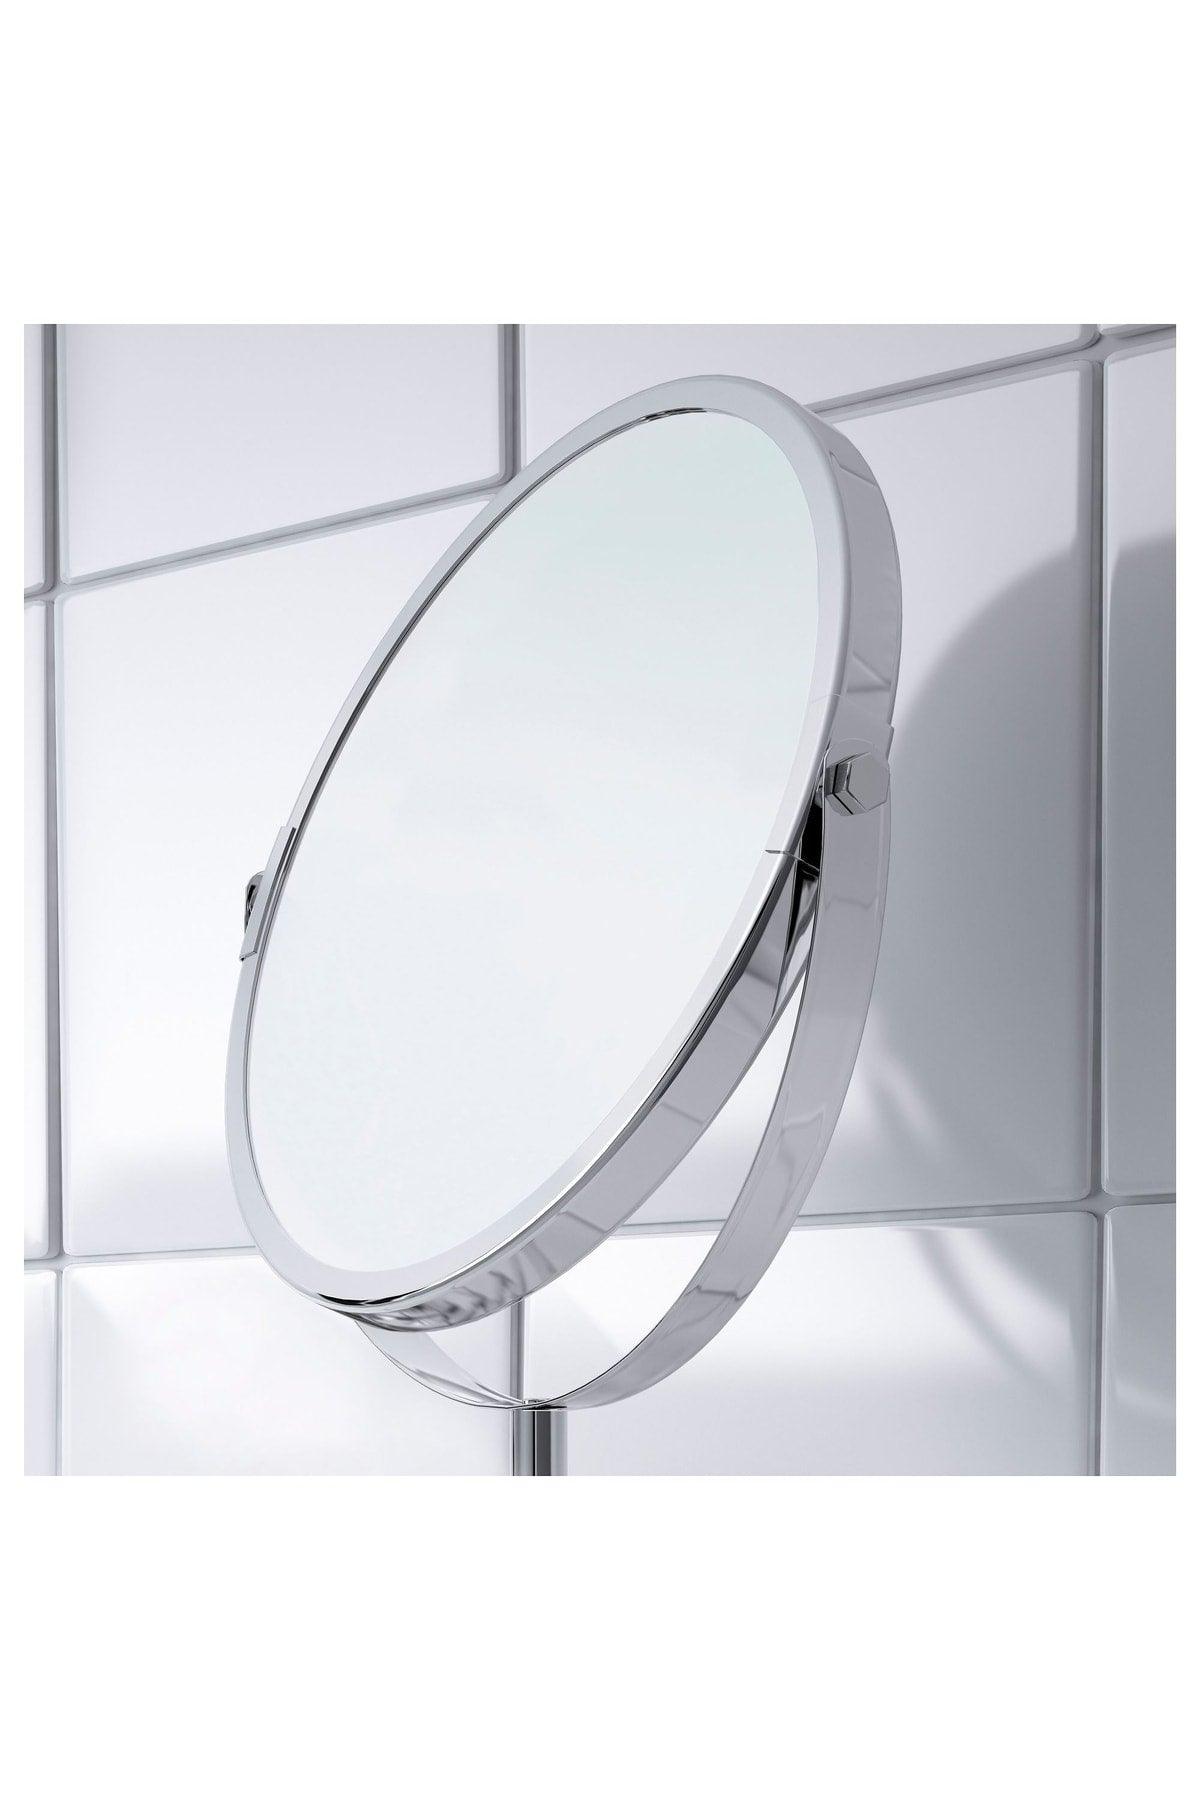 Magnifying Mirror Makeup Mirror Stainless Steel Mirror 17 Cm Diameter Double Side Enlarges One Side 3 Times - Swordslife